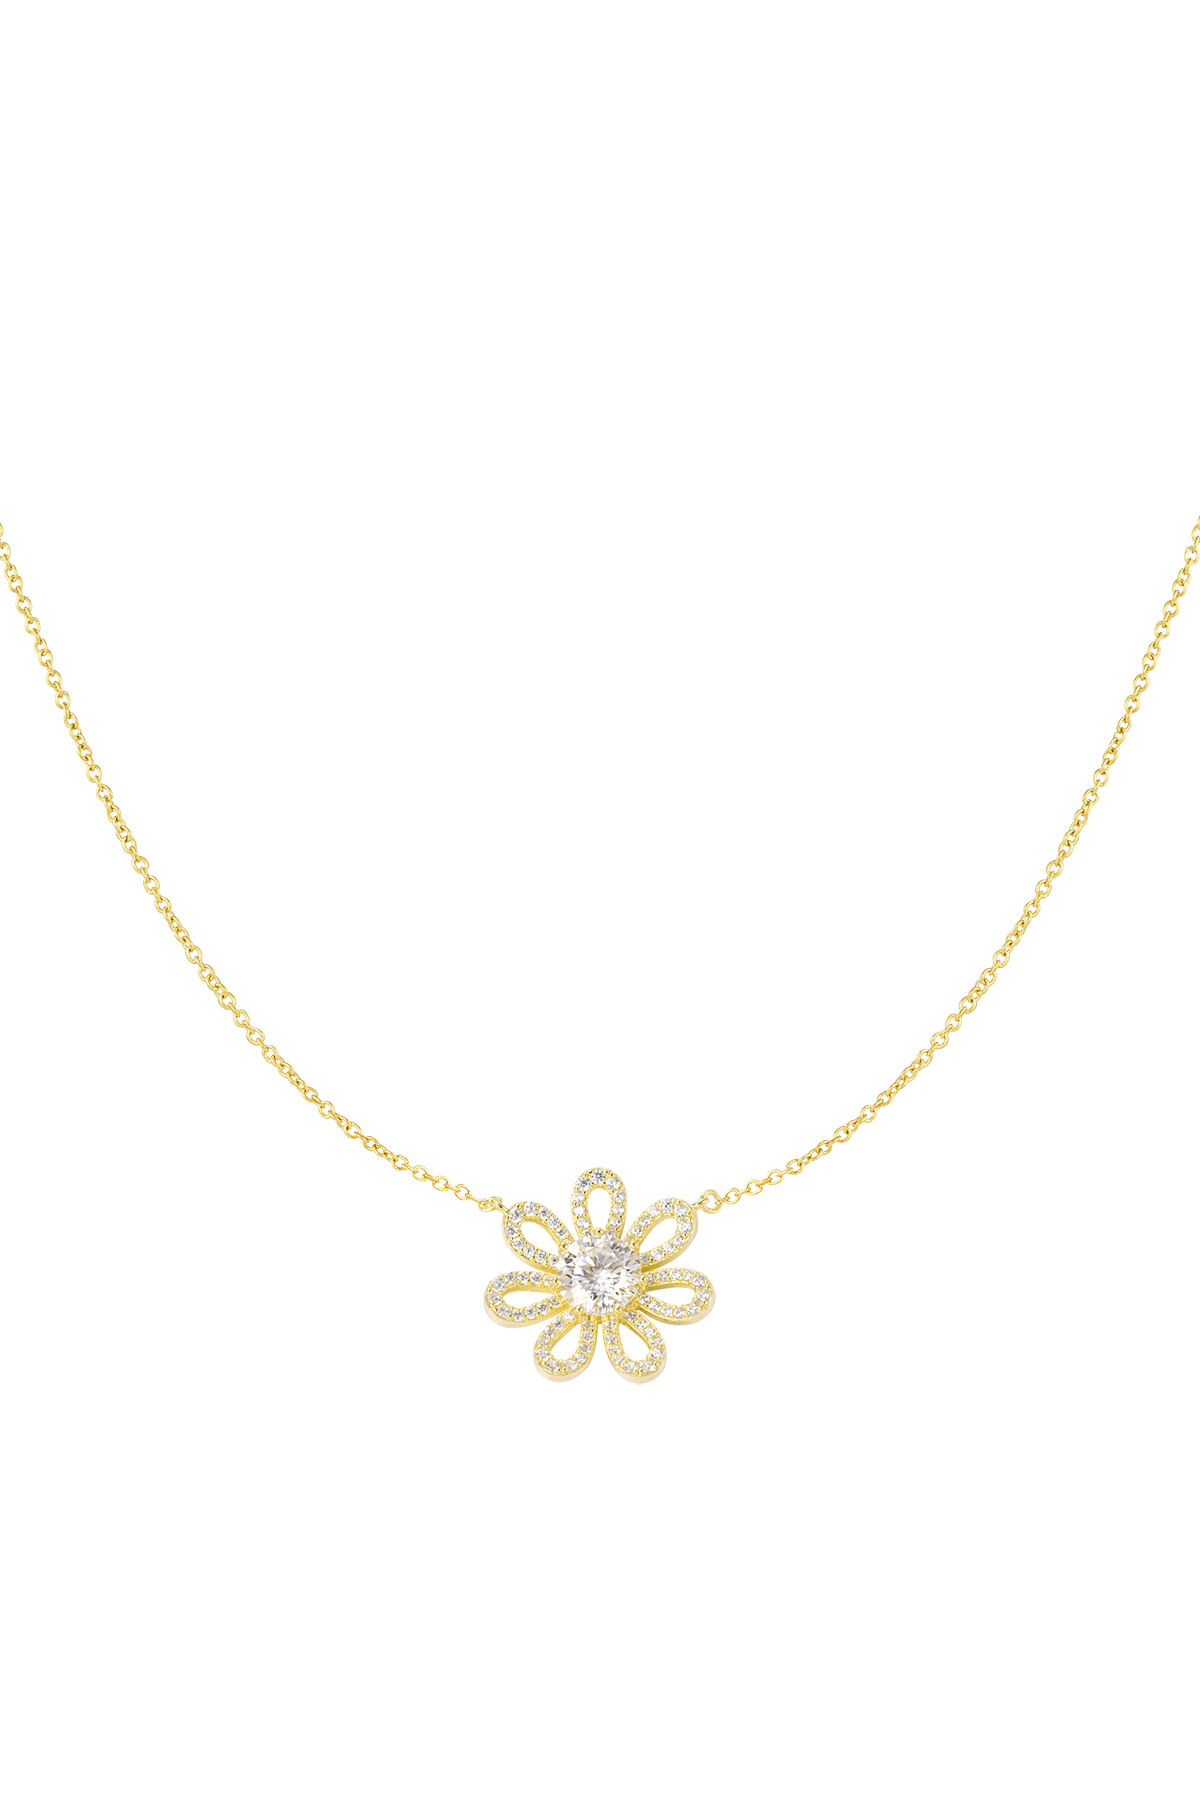 Necklace rhinestones flower - gold 